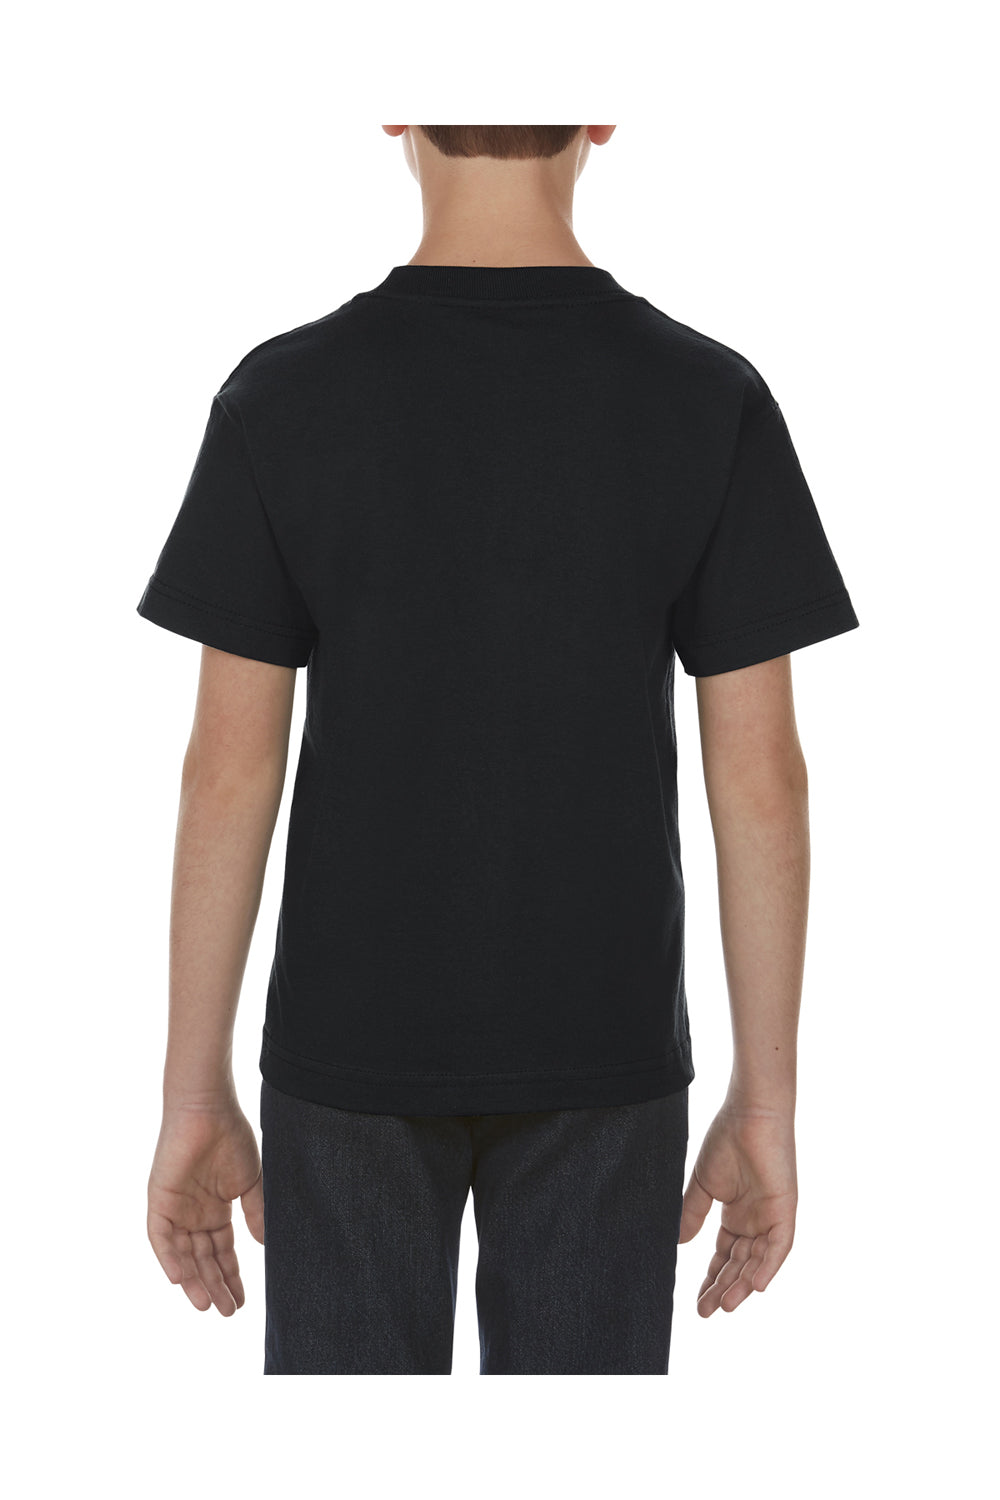 Alstyle AL3381 Youth Short Sleeve Crewneck T-Shirt Black Back